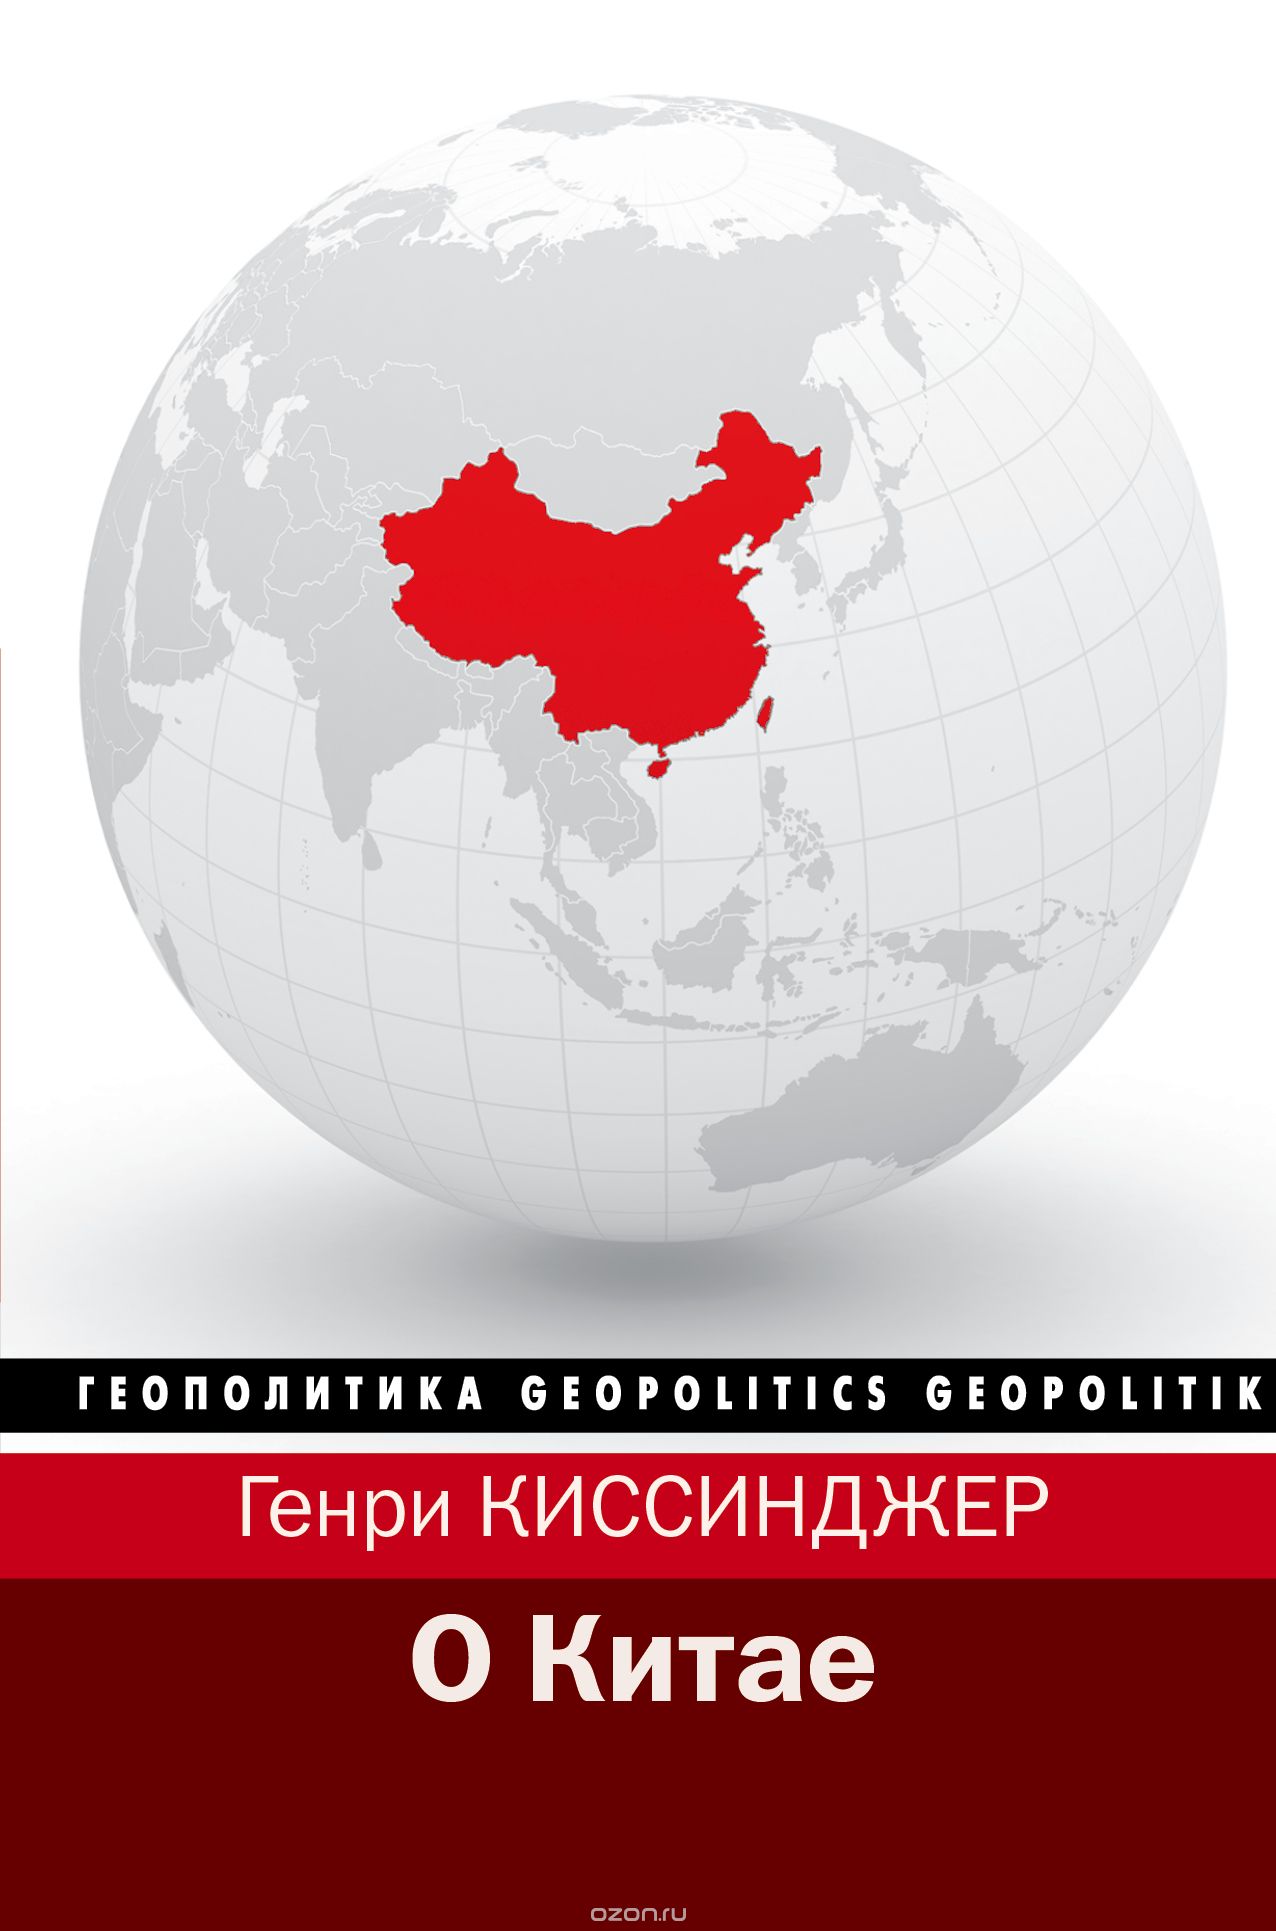 Скачать книгу "О Китае, Генри Киссинджер"